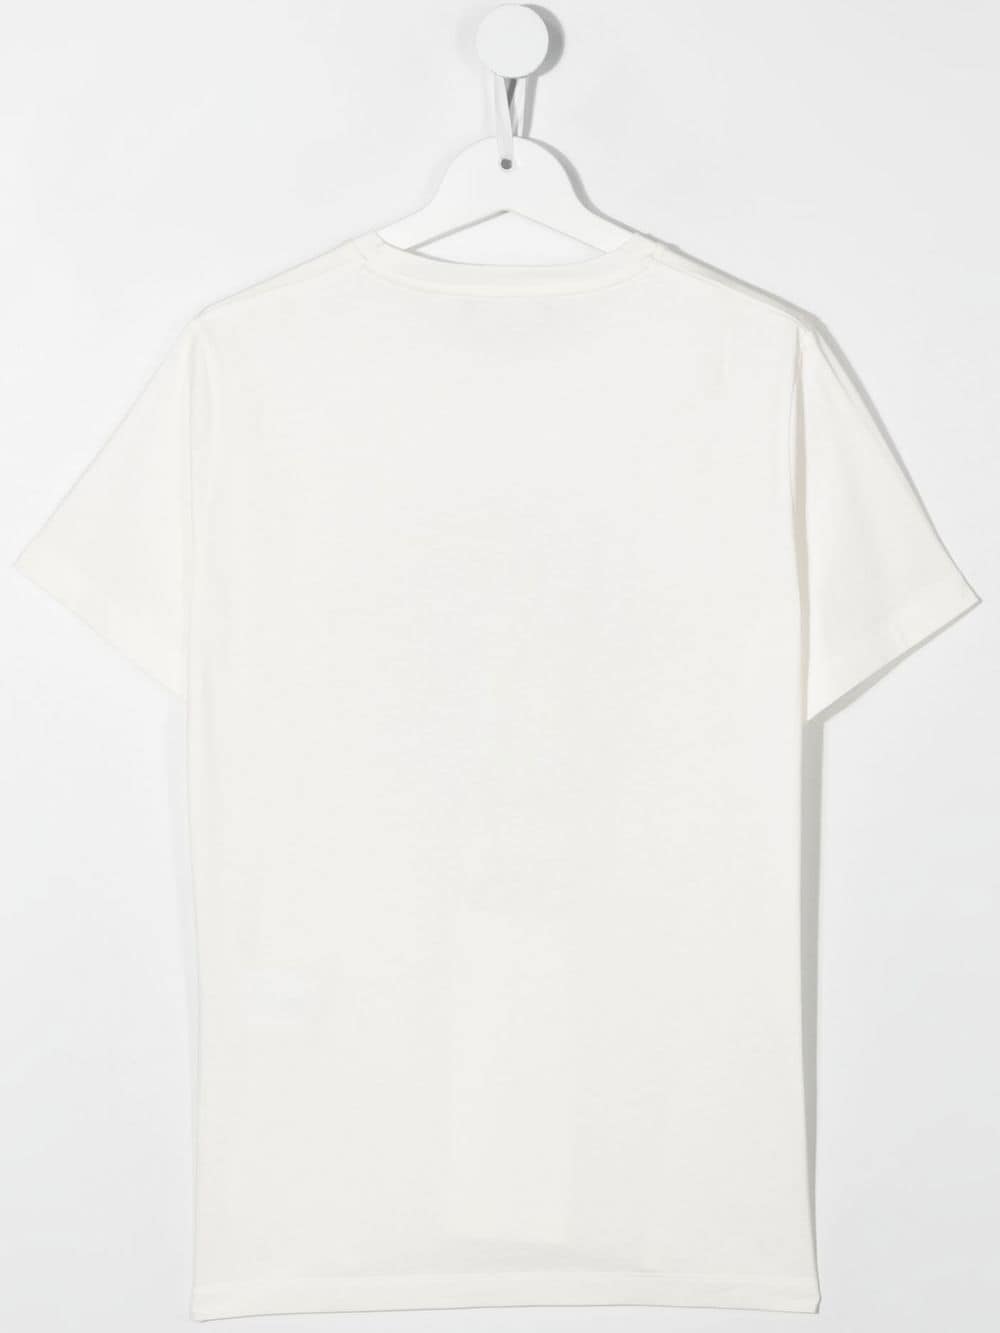 T-shirt TEEN bianca/multicolore con stampa Medusa